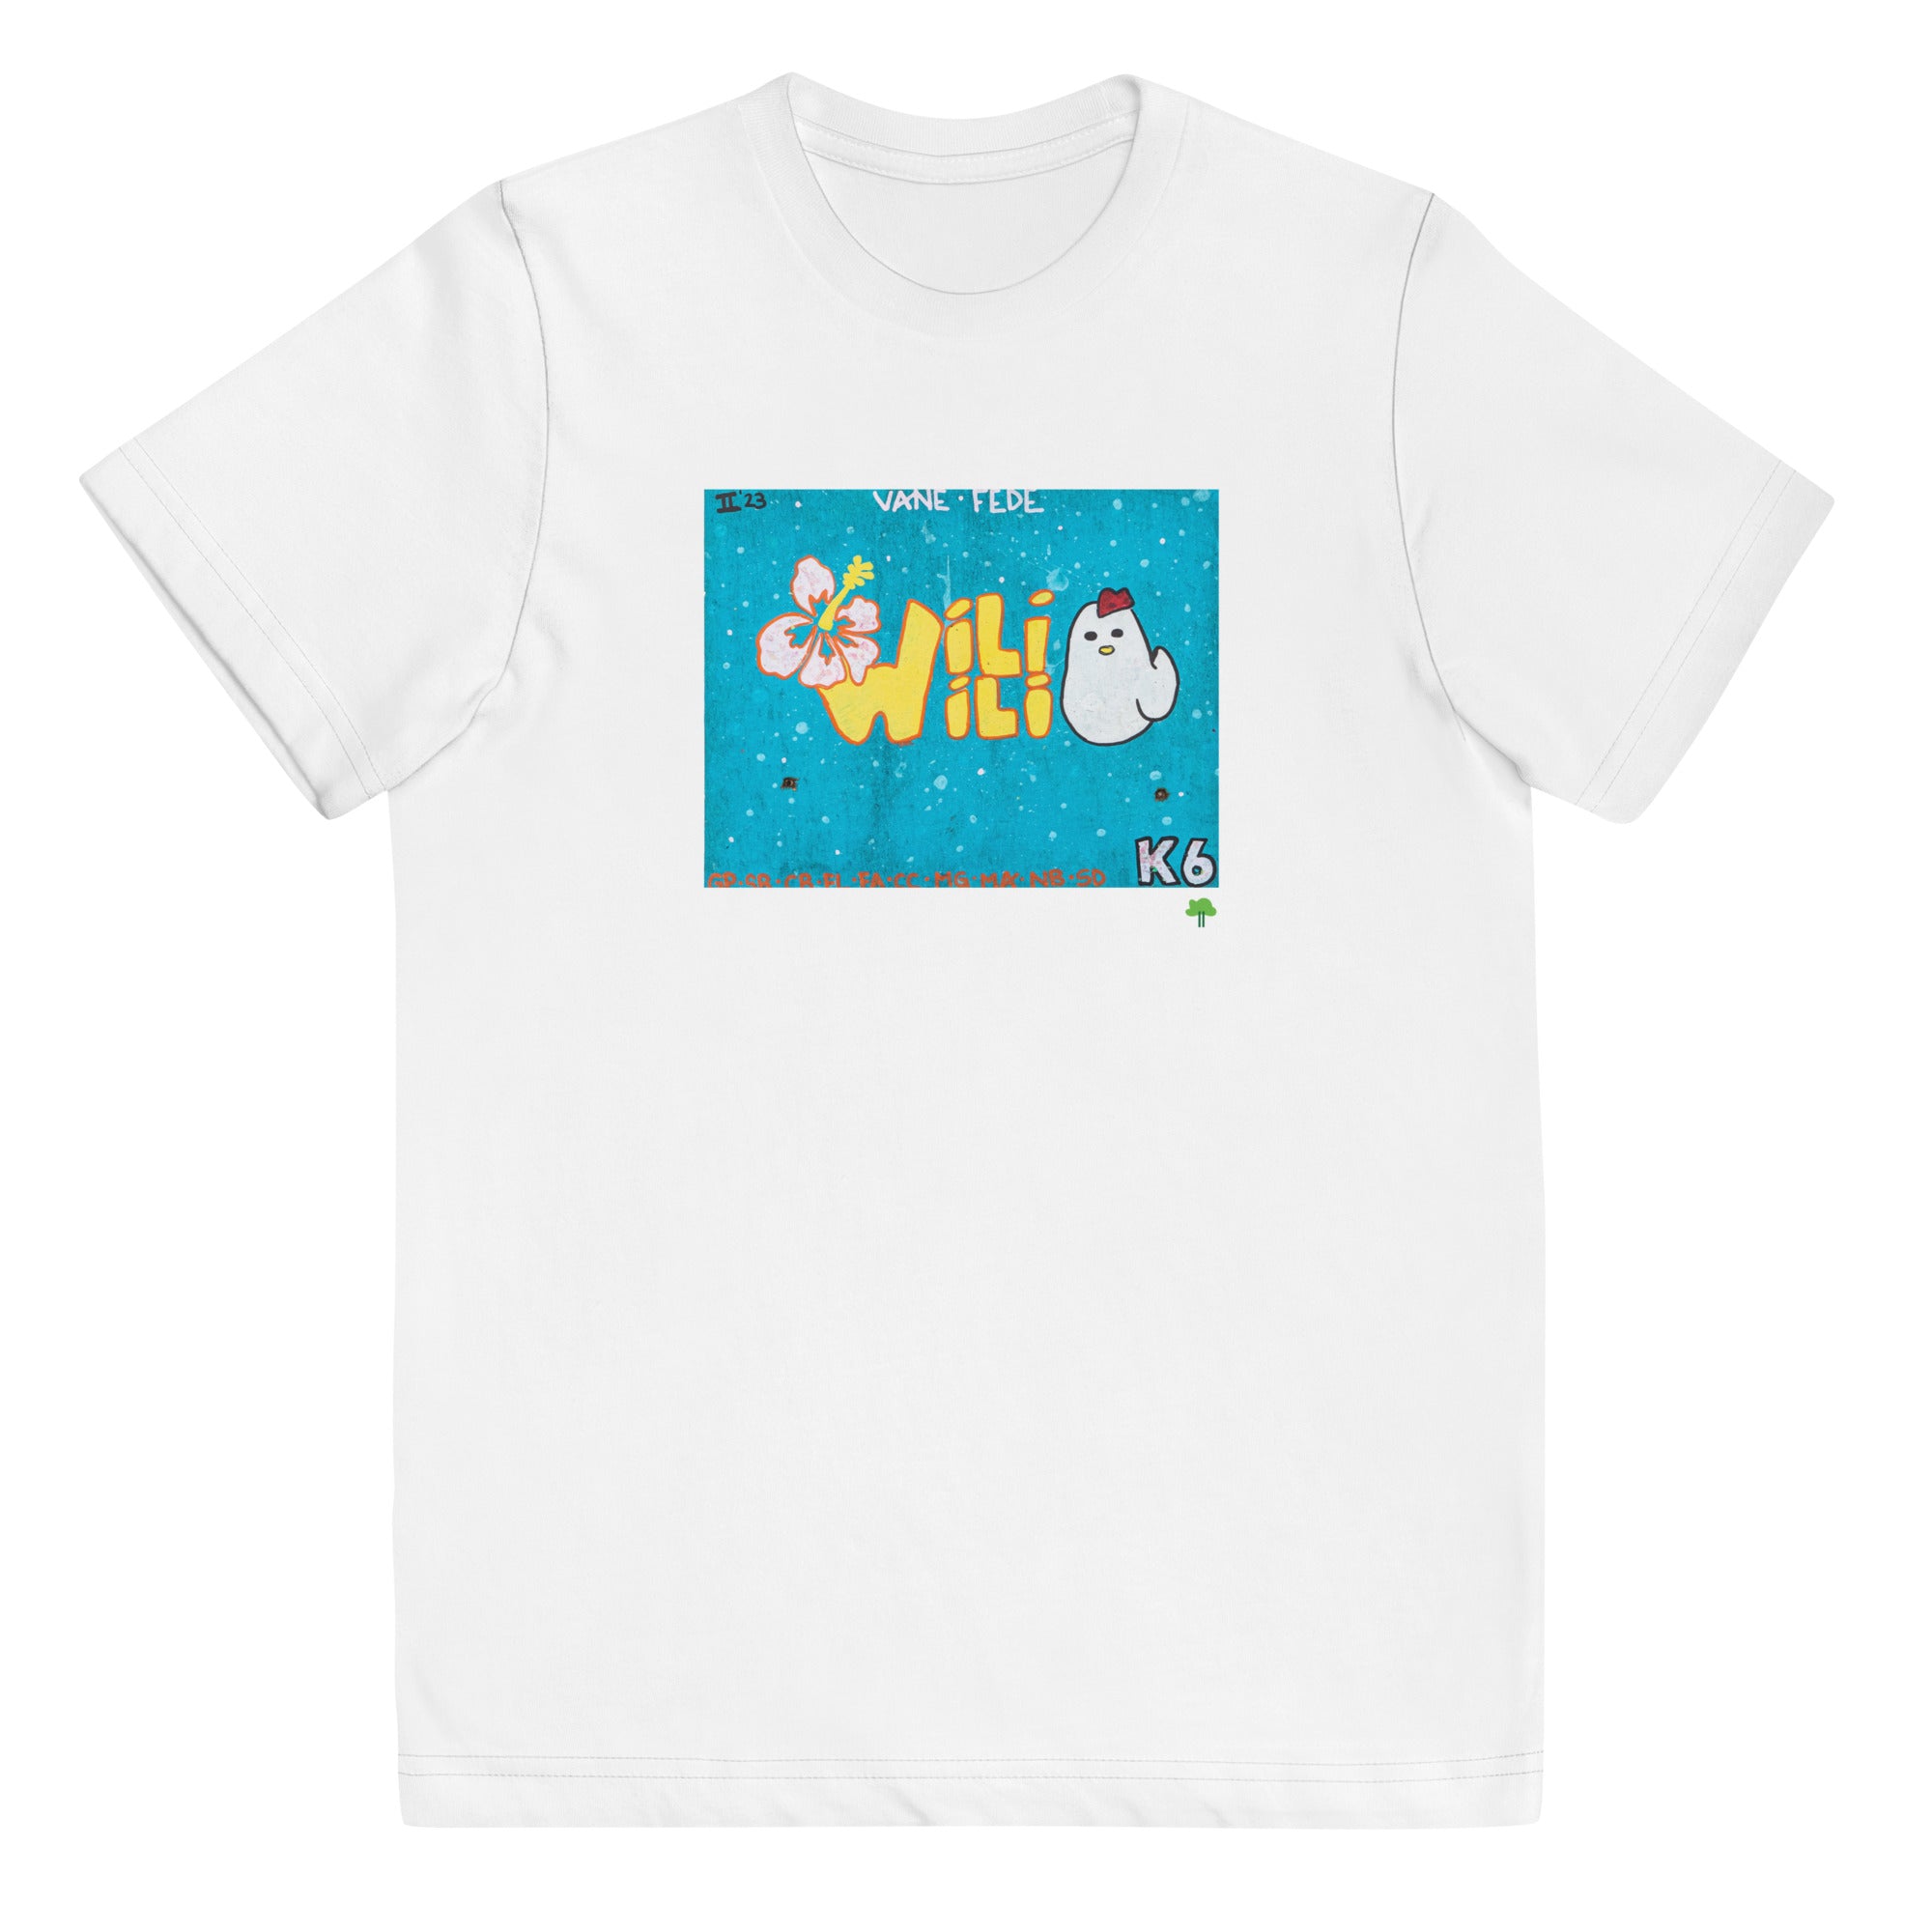 II Temp - Sabana - K6 | Youth jersey t-shirt